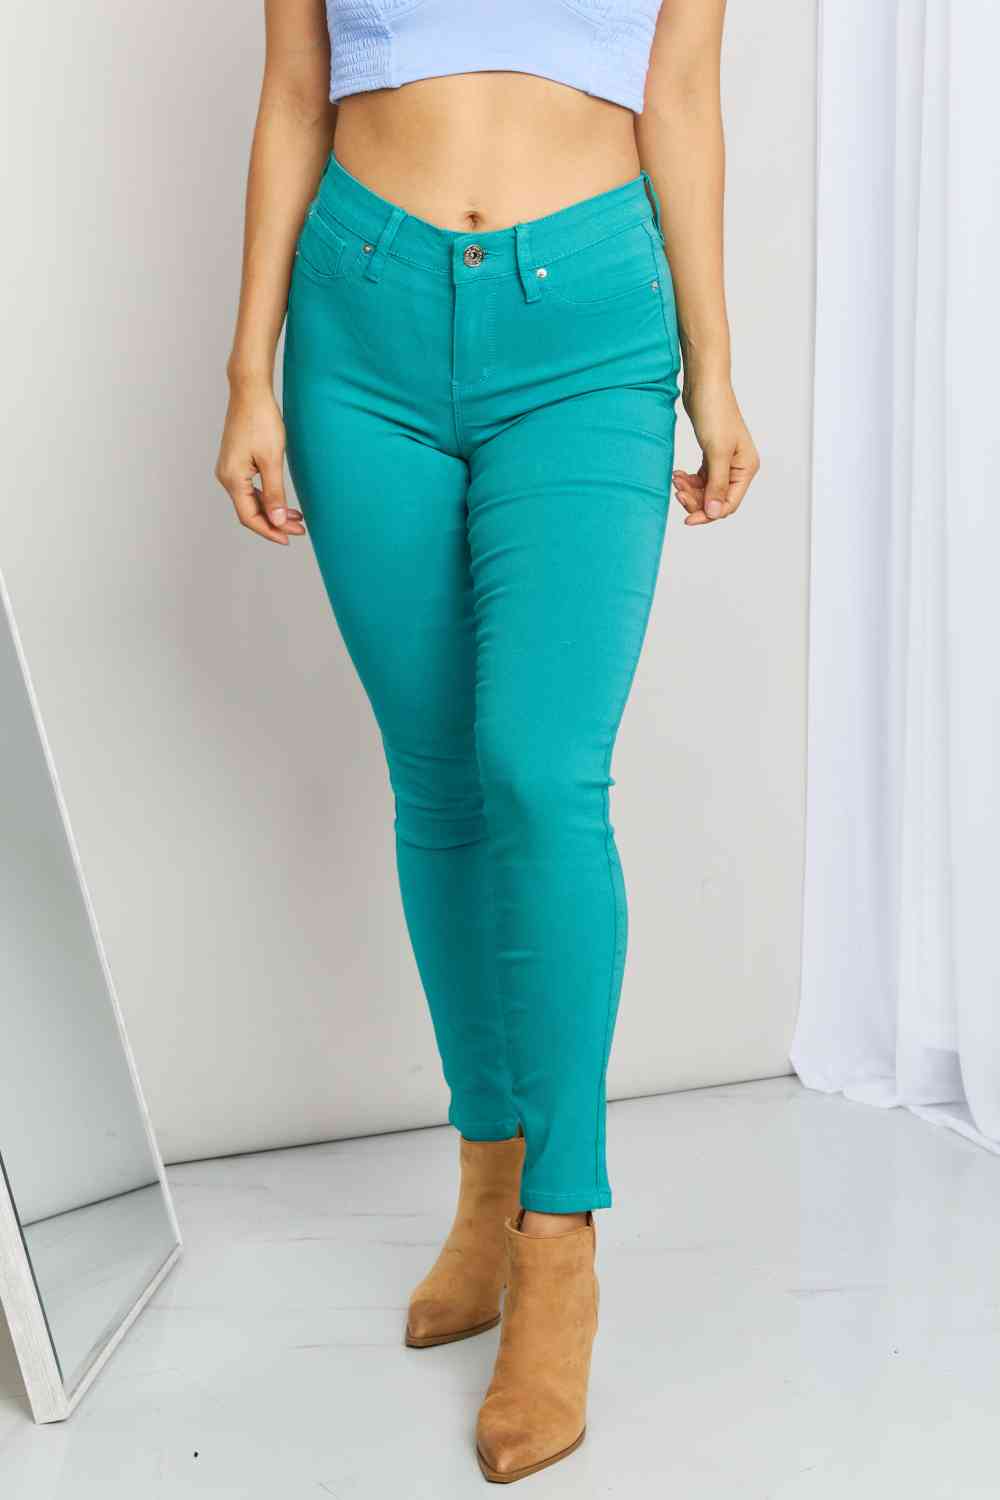 YMI Jeanswear Kate Hyper-Stretch Full Size Mid-Rise Skinny Jeans in Sea Green Sea Green